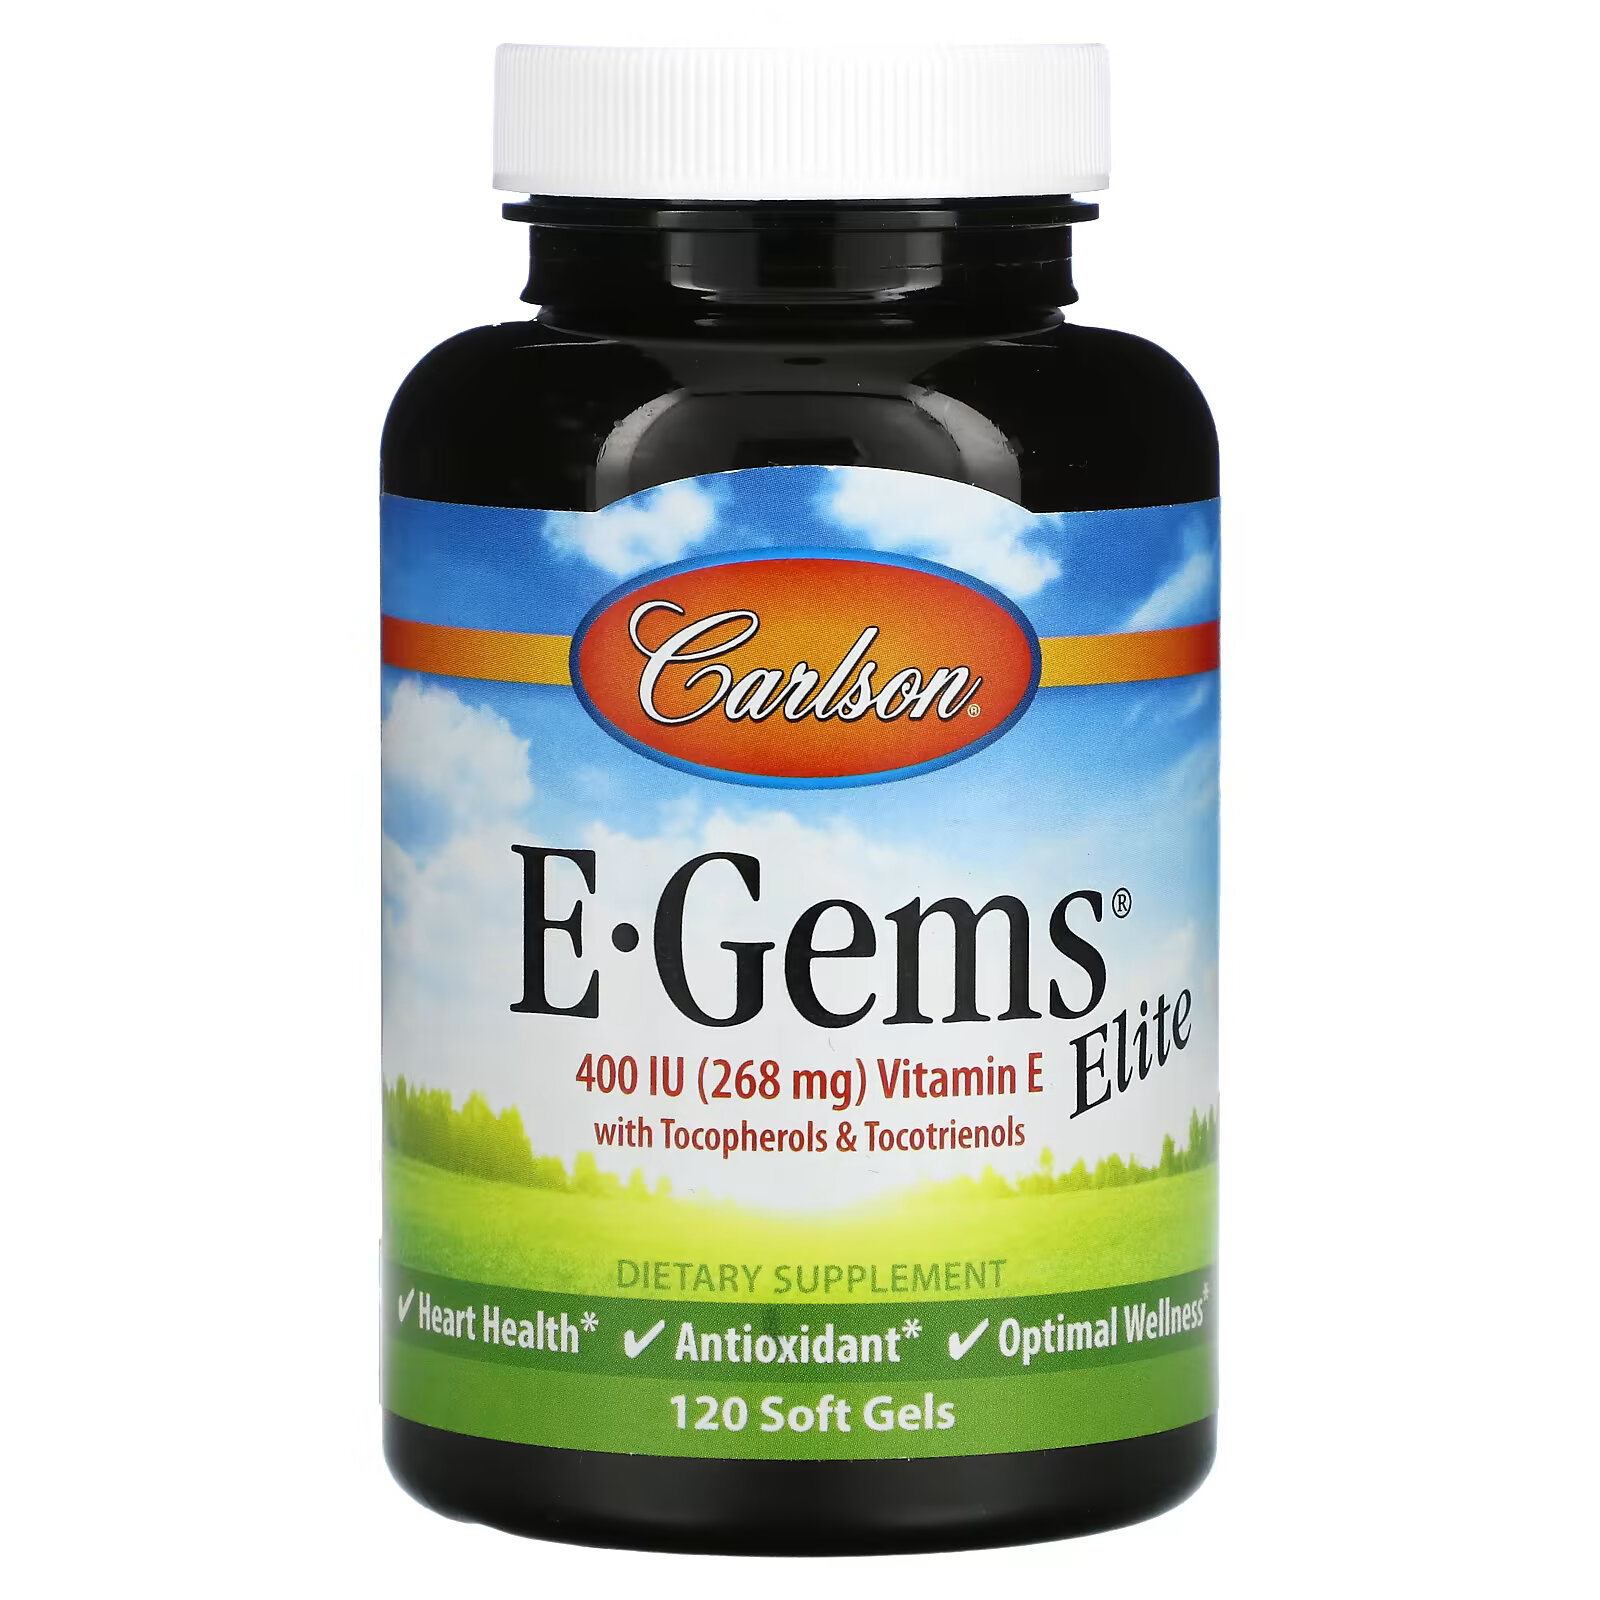 Carlson, E-Gems Elite, витамин E, 268 мг (400 МЕ), 120 мягких таблеток carlson e gems elite витамин e с токоферолами и токотриенолами 670 мг 1000 ме 60 мягких таблеток